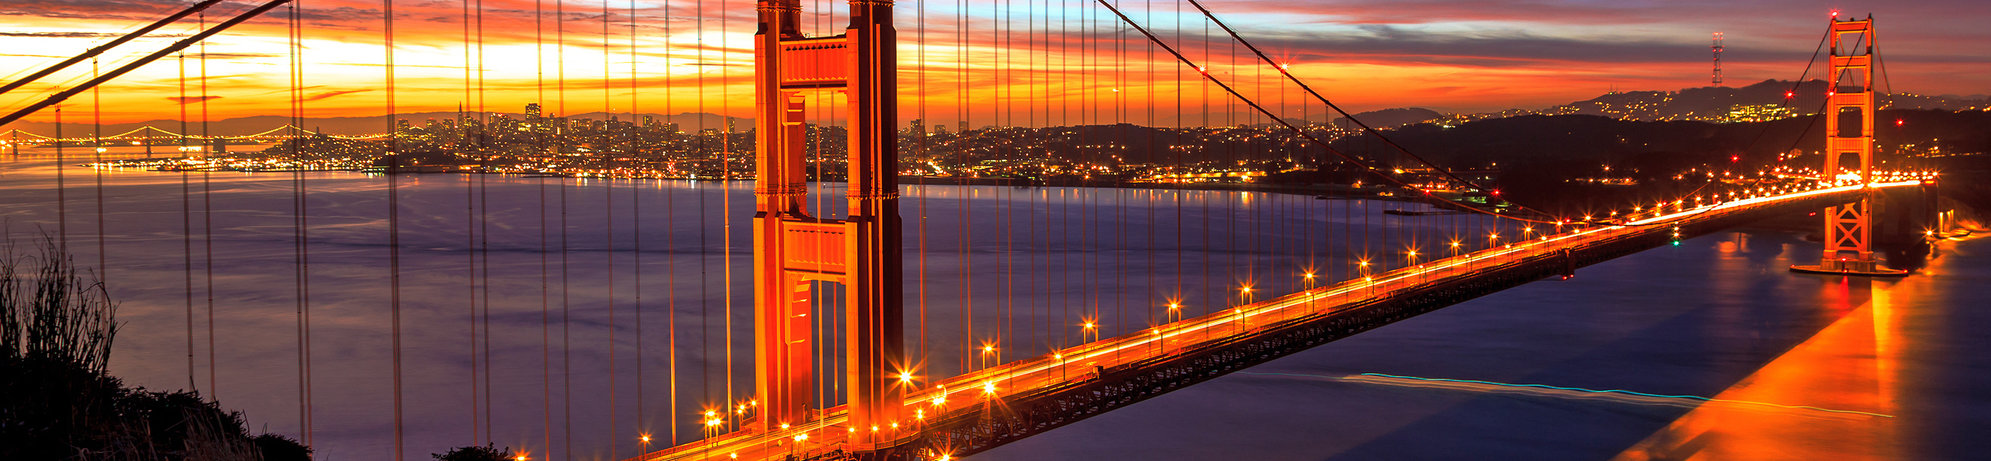 Golden Gate Bridge, California - Sunset